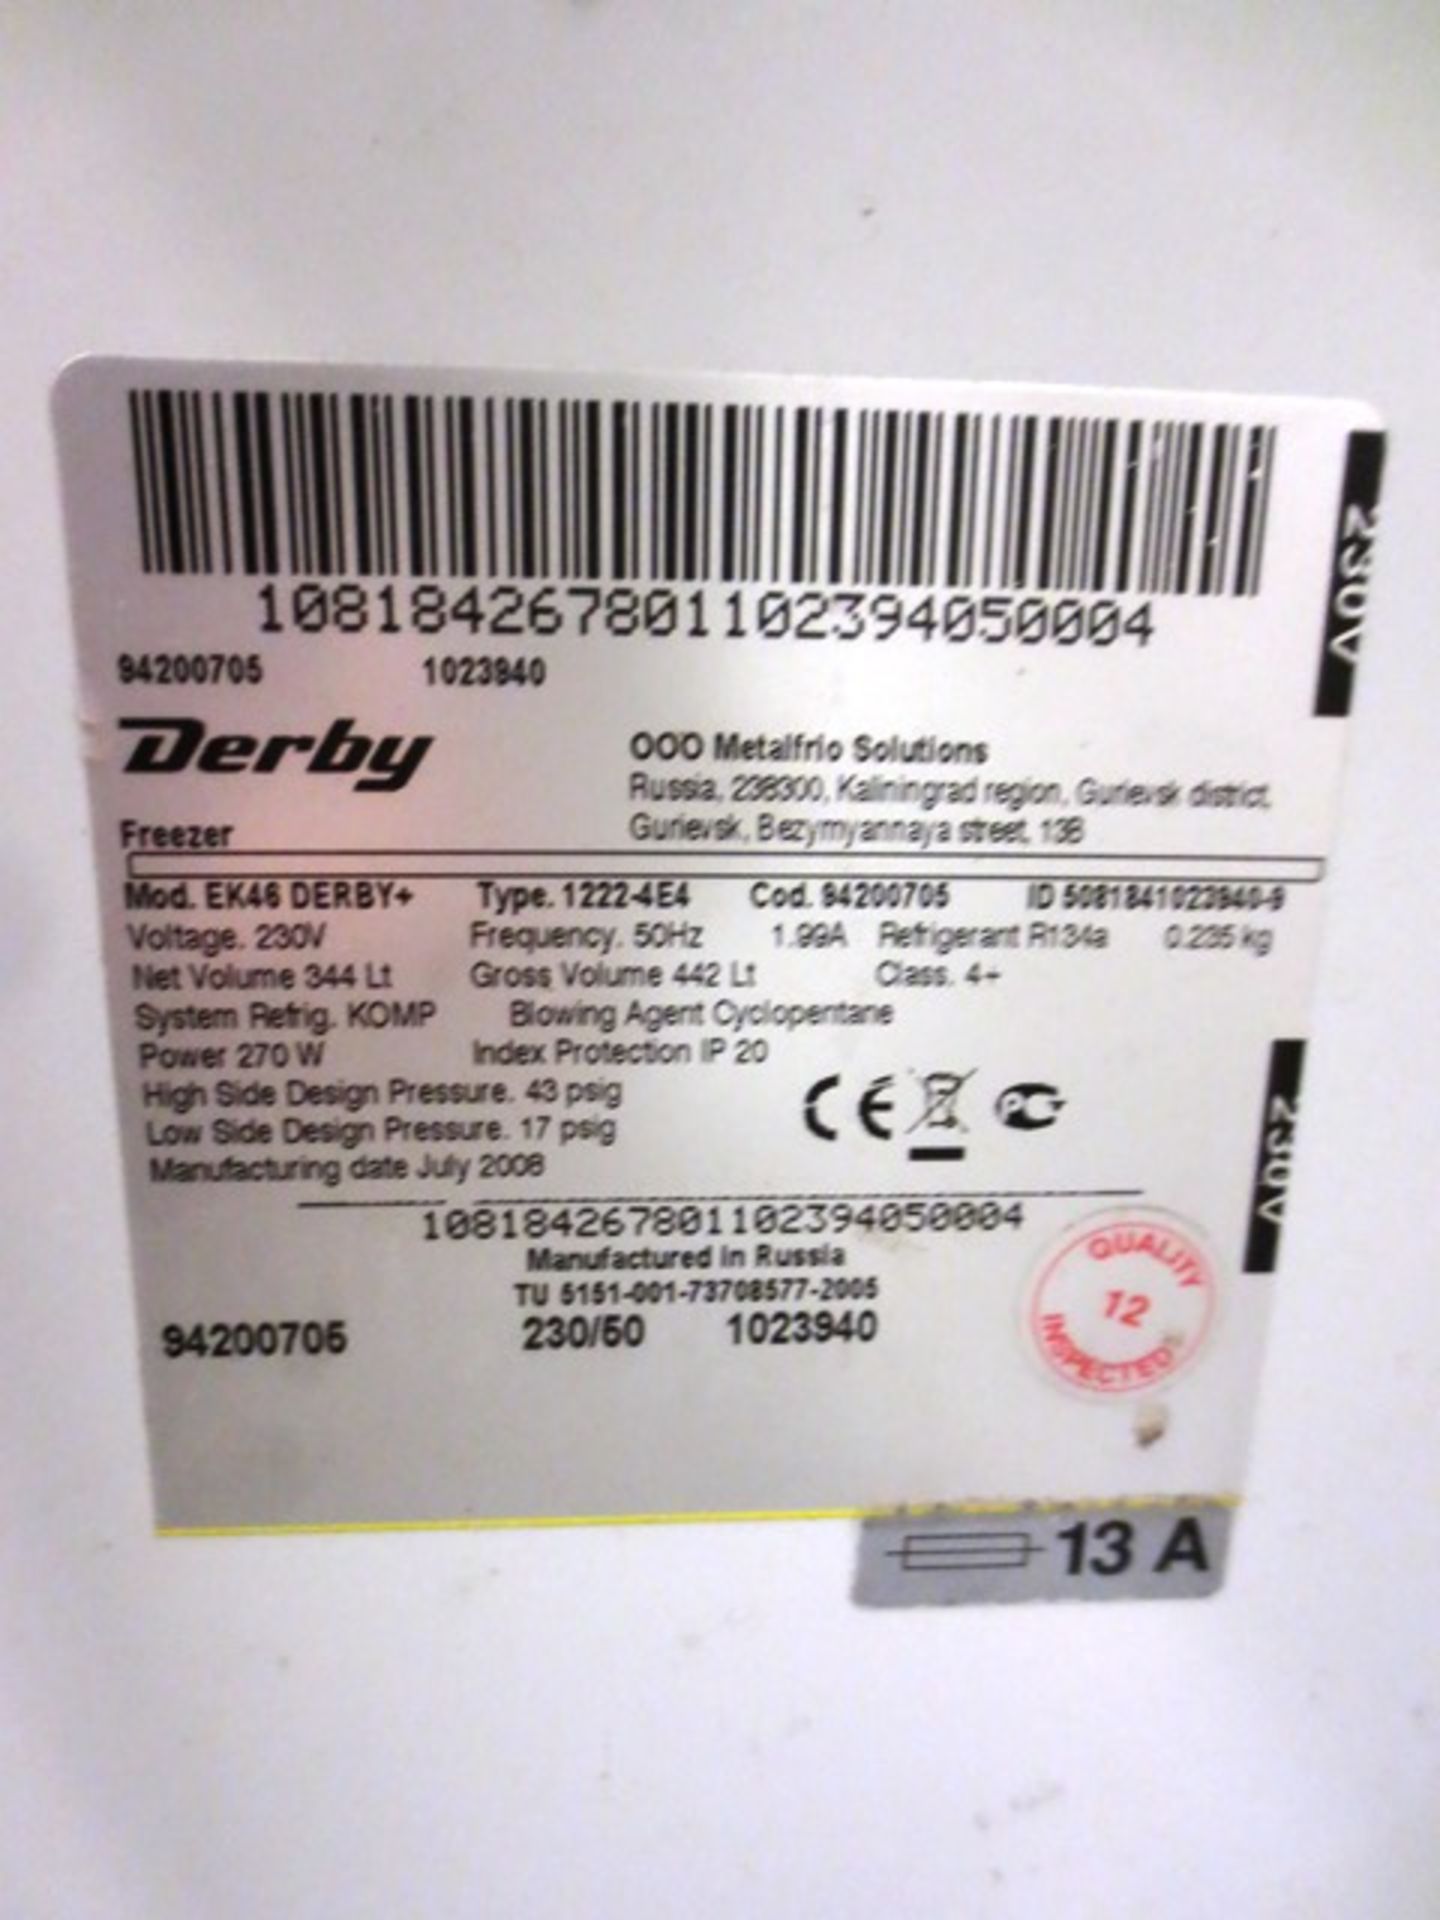 Derby EK46 twin glass sliding door ice cream chest freezer, serial no: 5081841023940-9(2008) - Image 2 of 2